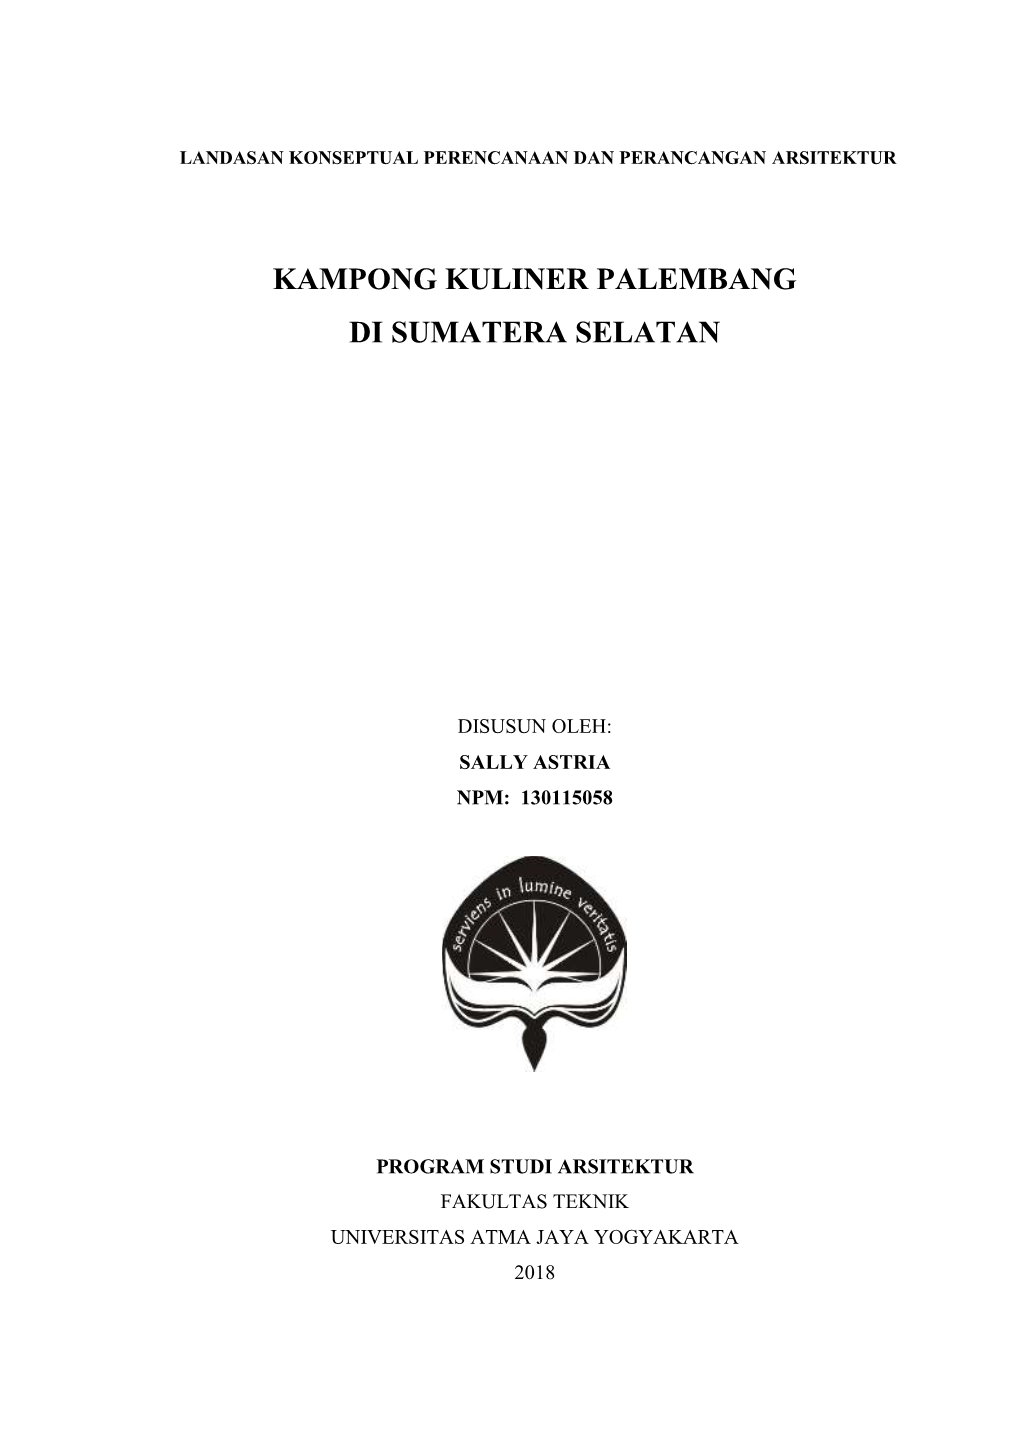 Kampong Kuliner Palembang Di Sumatera Selatan